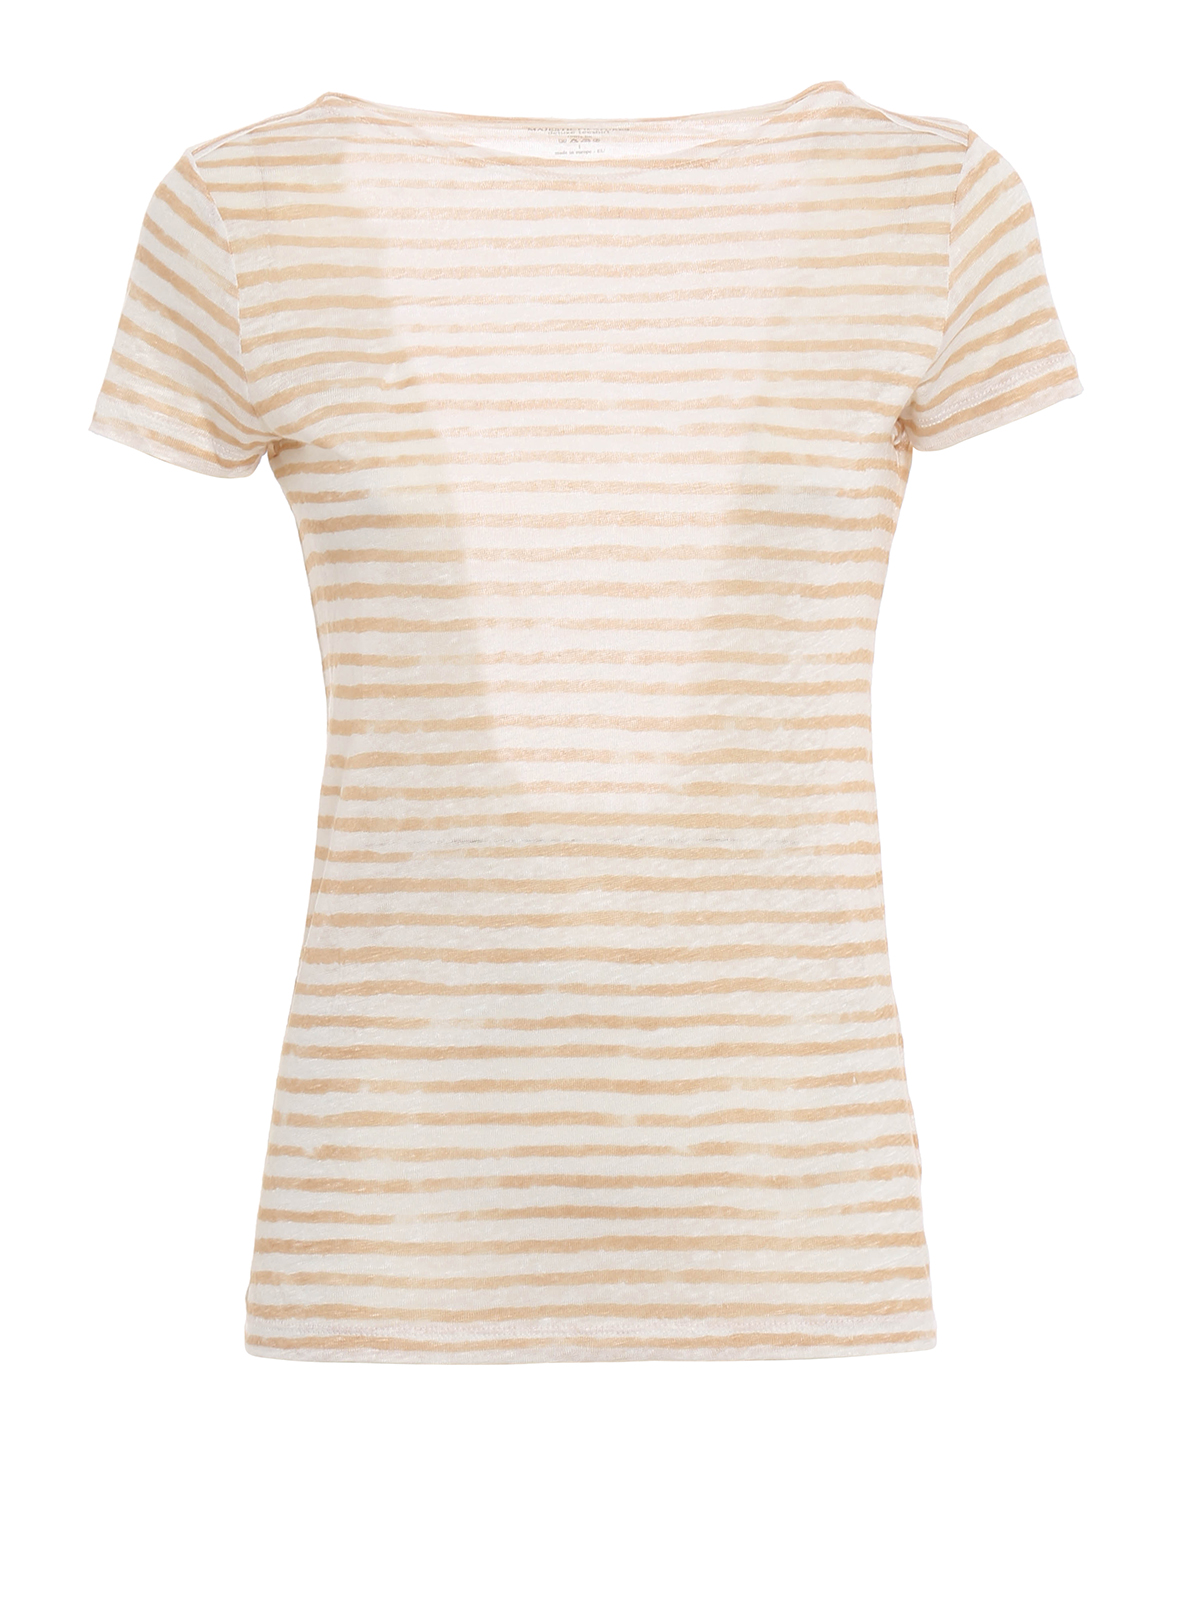 Majestic Filatures - Striped linen T-shirt - t-shirts - E17 06 02716